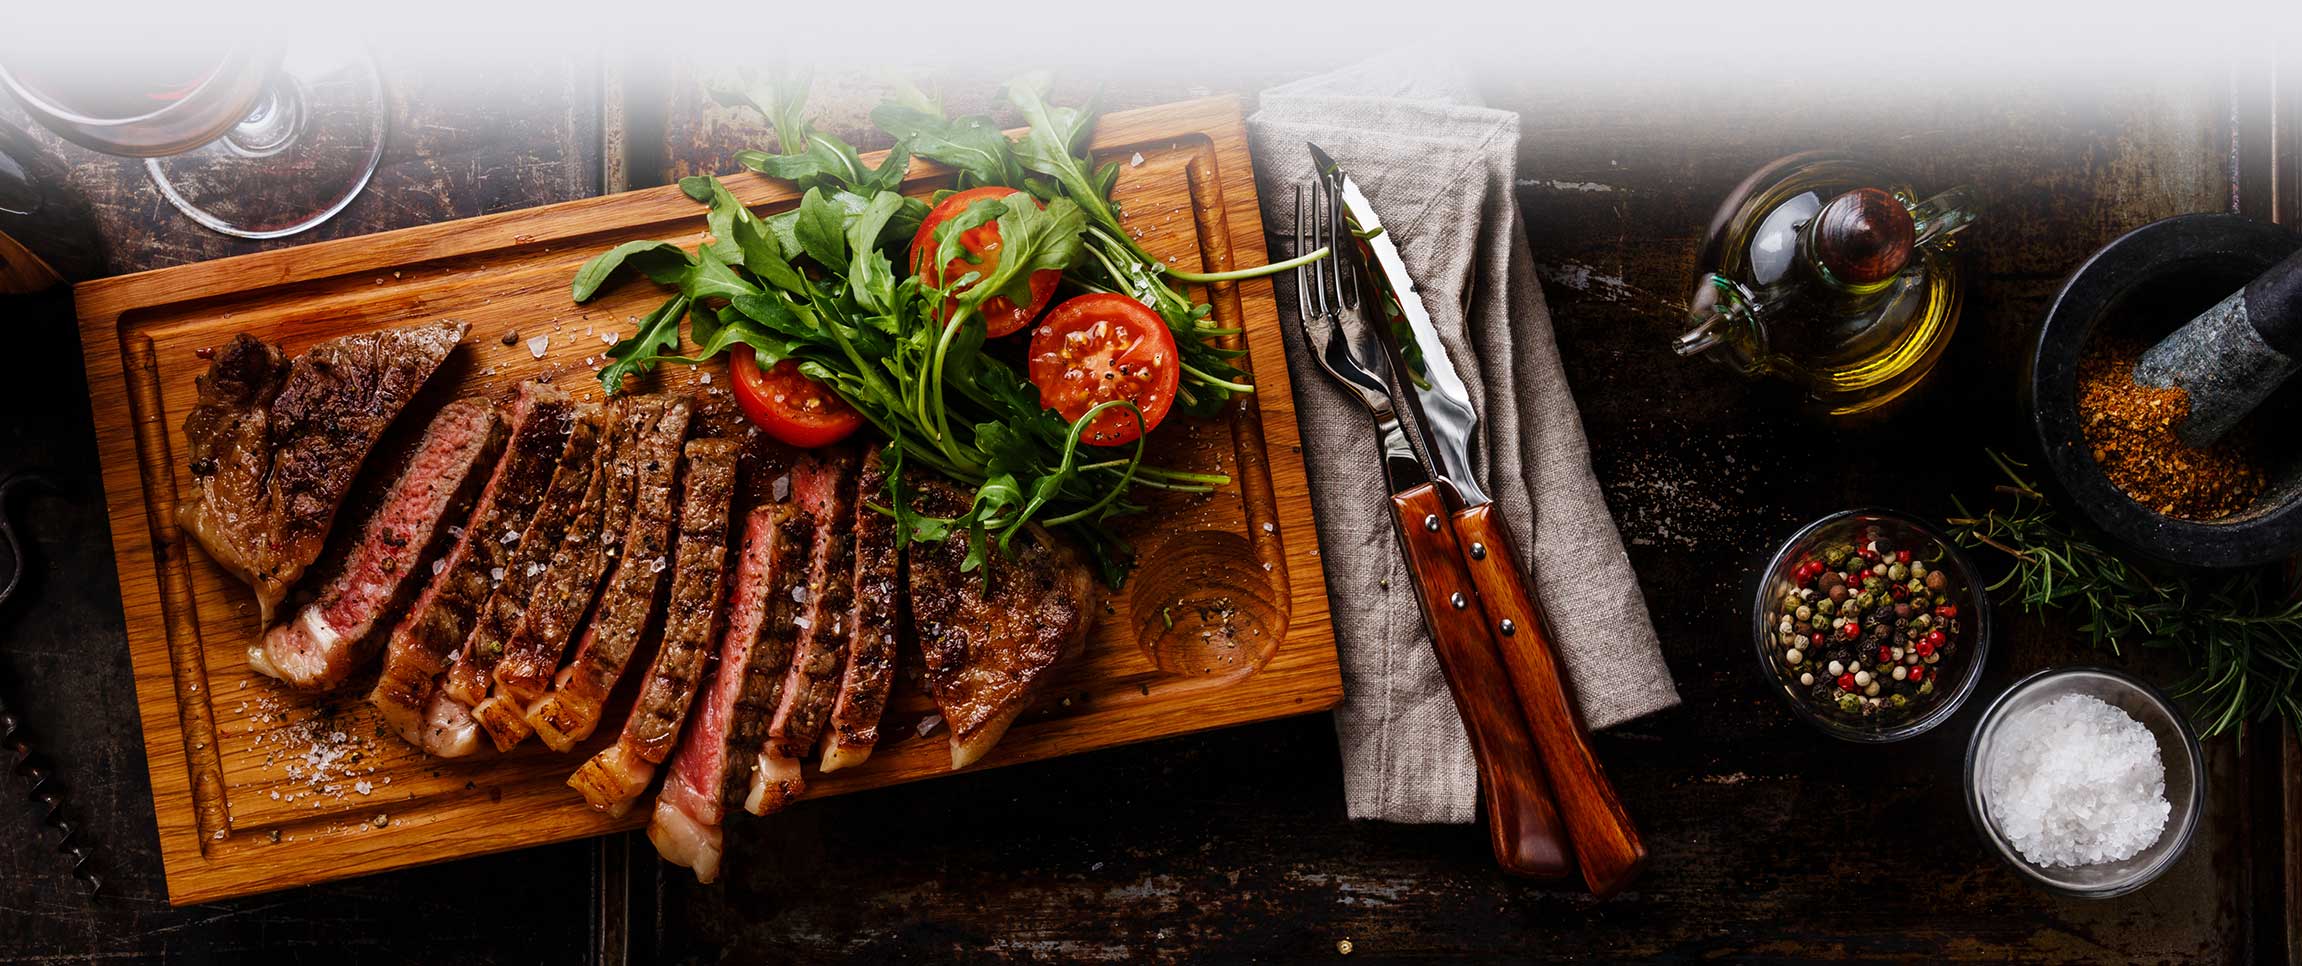 Sliced steak on a wooden cutting board